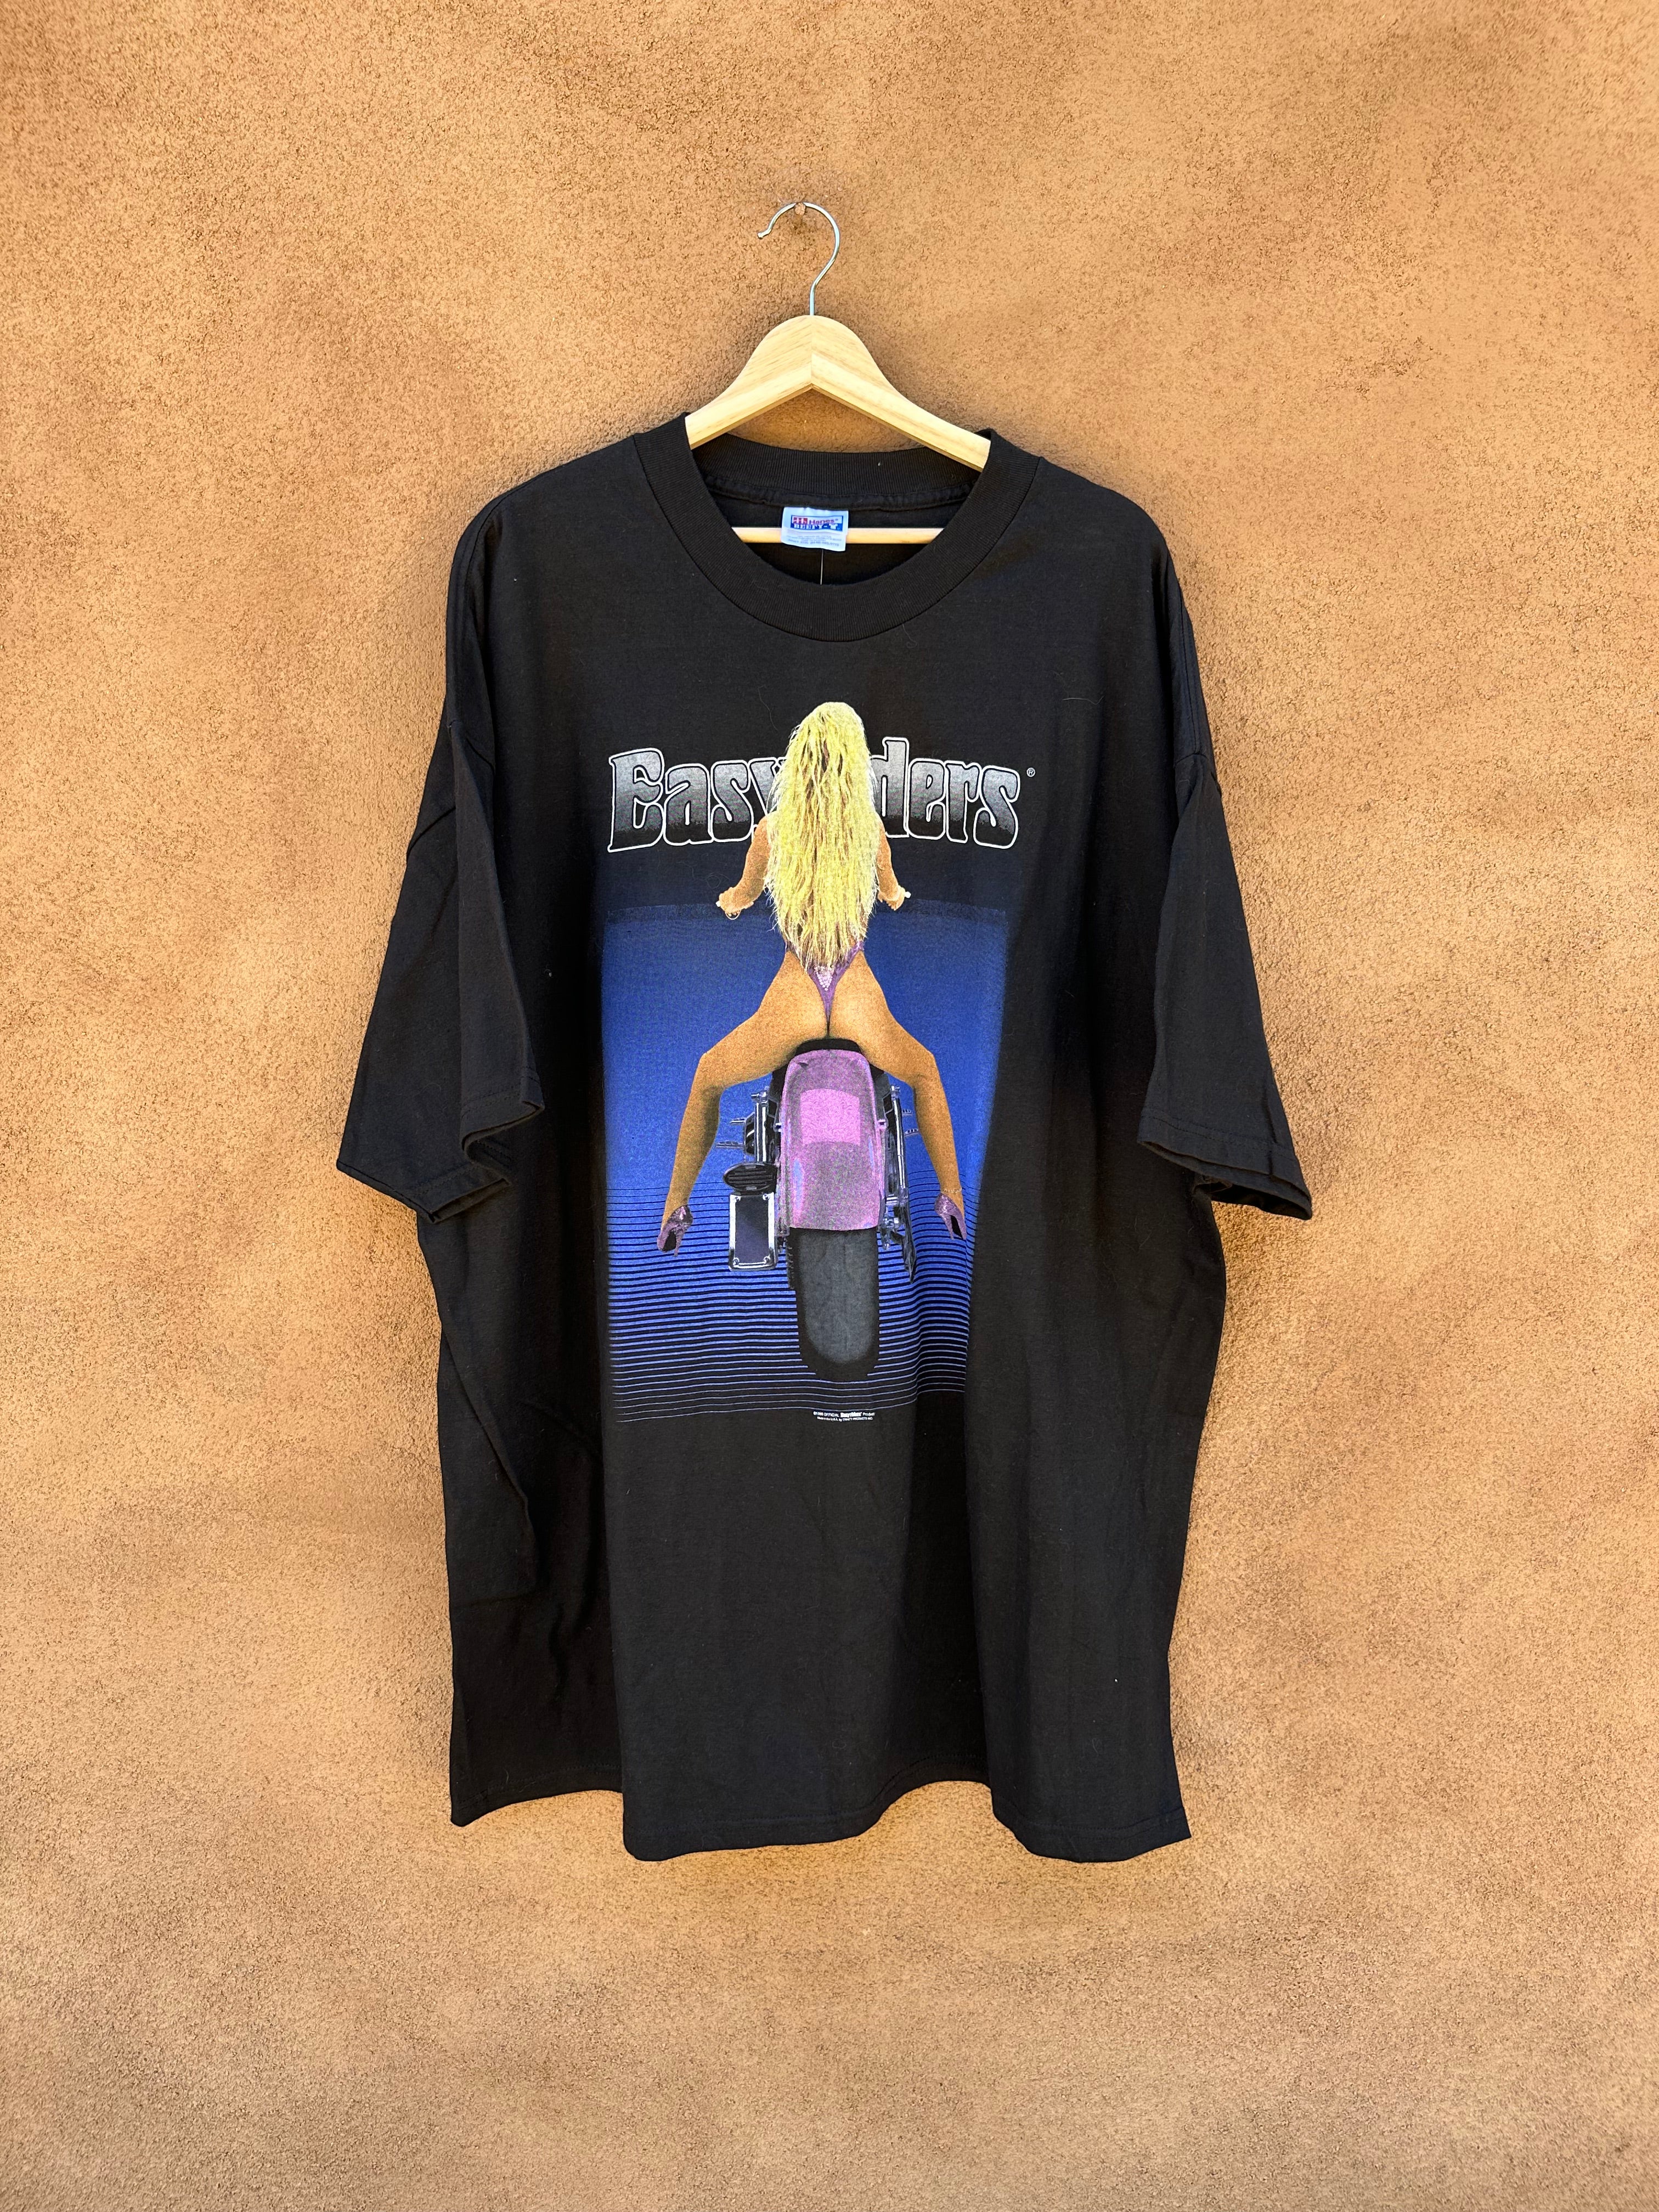 Vintage Scottsdale, Arizona 1996 Iconic Easyriders T-shirt